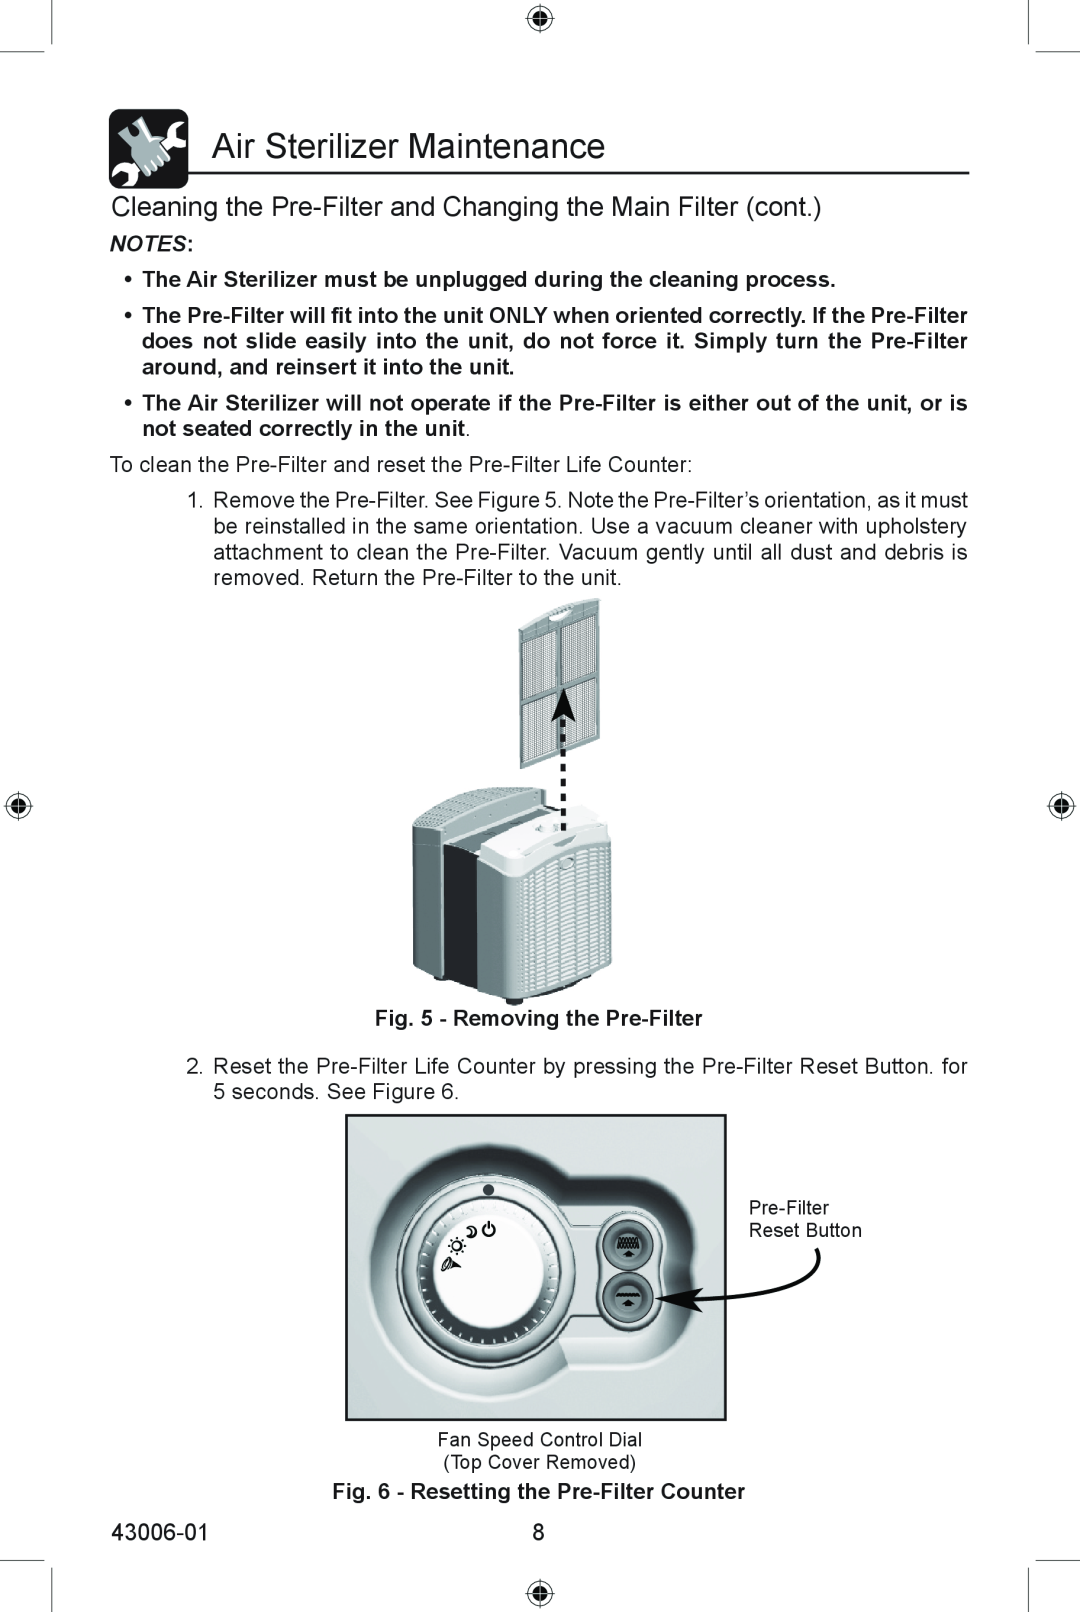 Hunter Fan 30987 manual Air Sterilizer Maintenance, 43006-01, Removing the Pre-Filter, Resetting the Pre-FilterCounter 